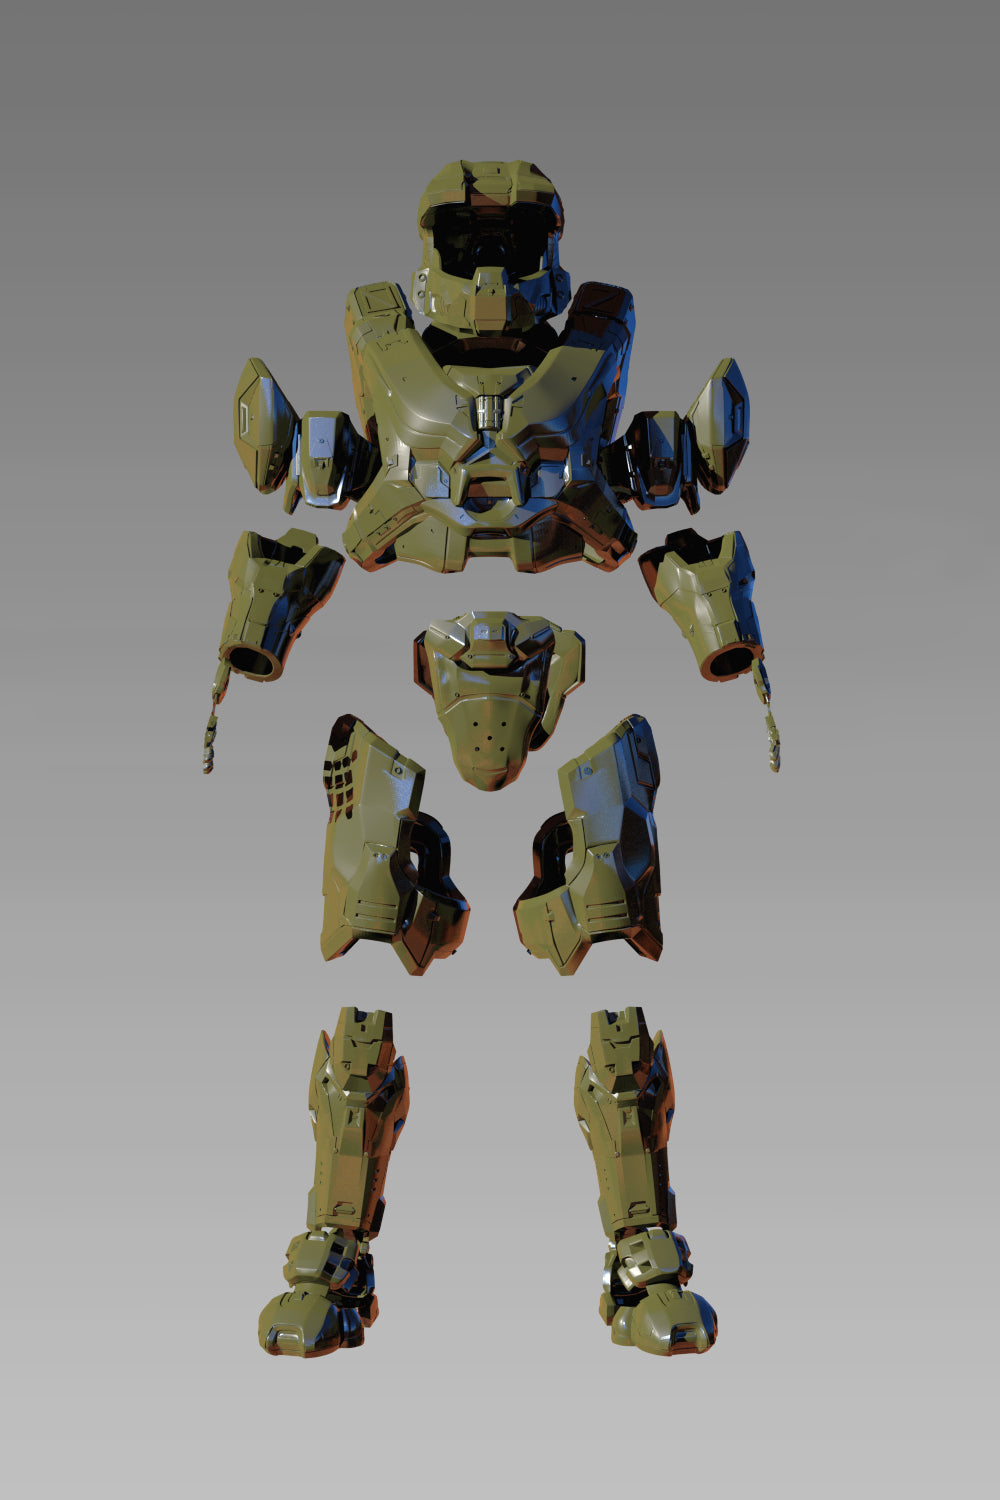 halo master chief armor blueprints